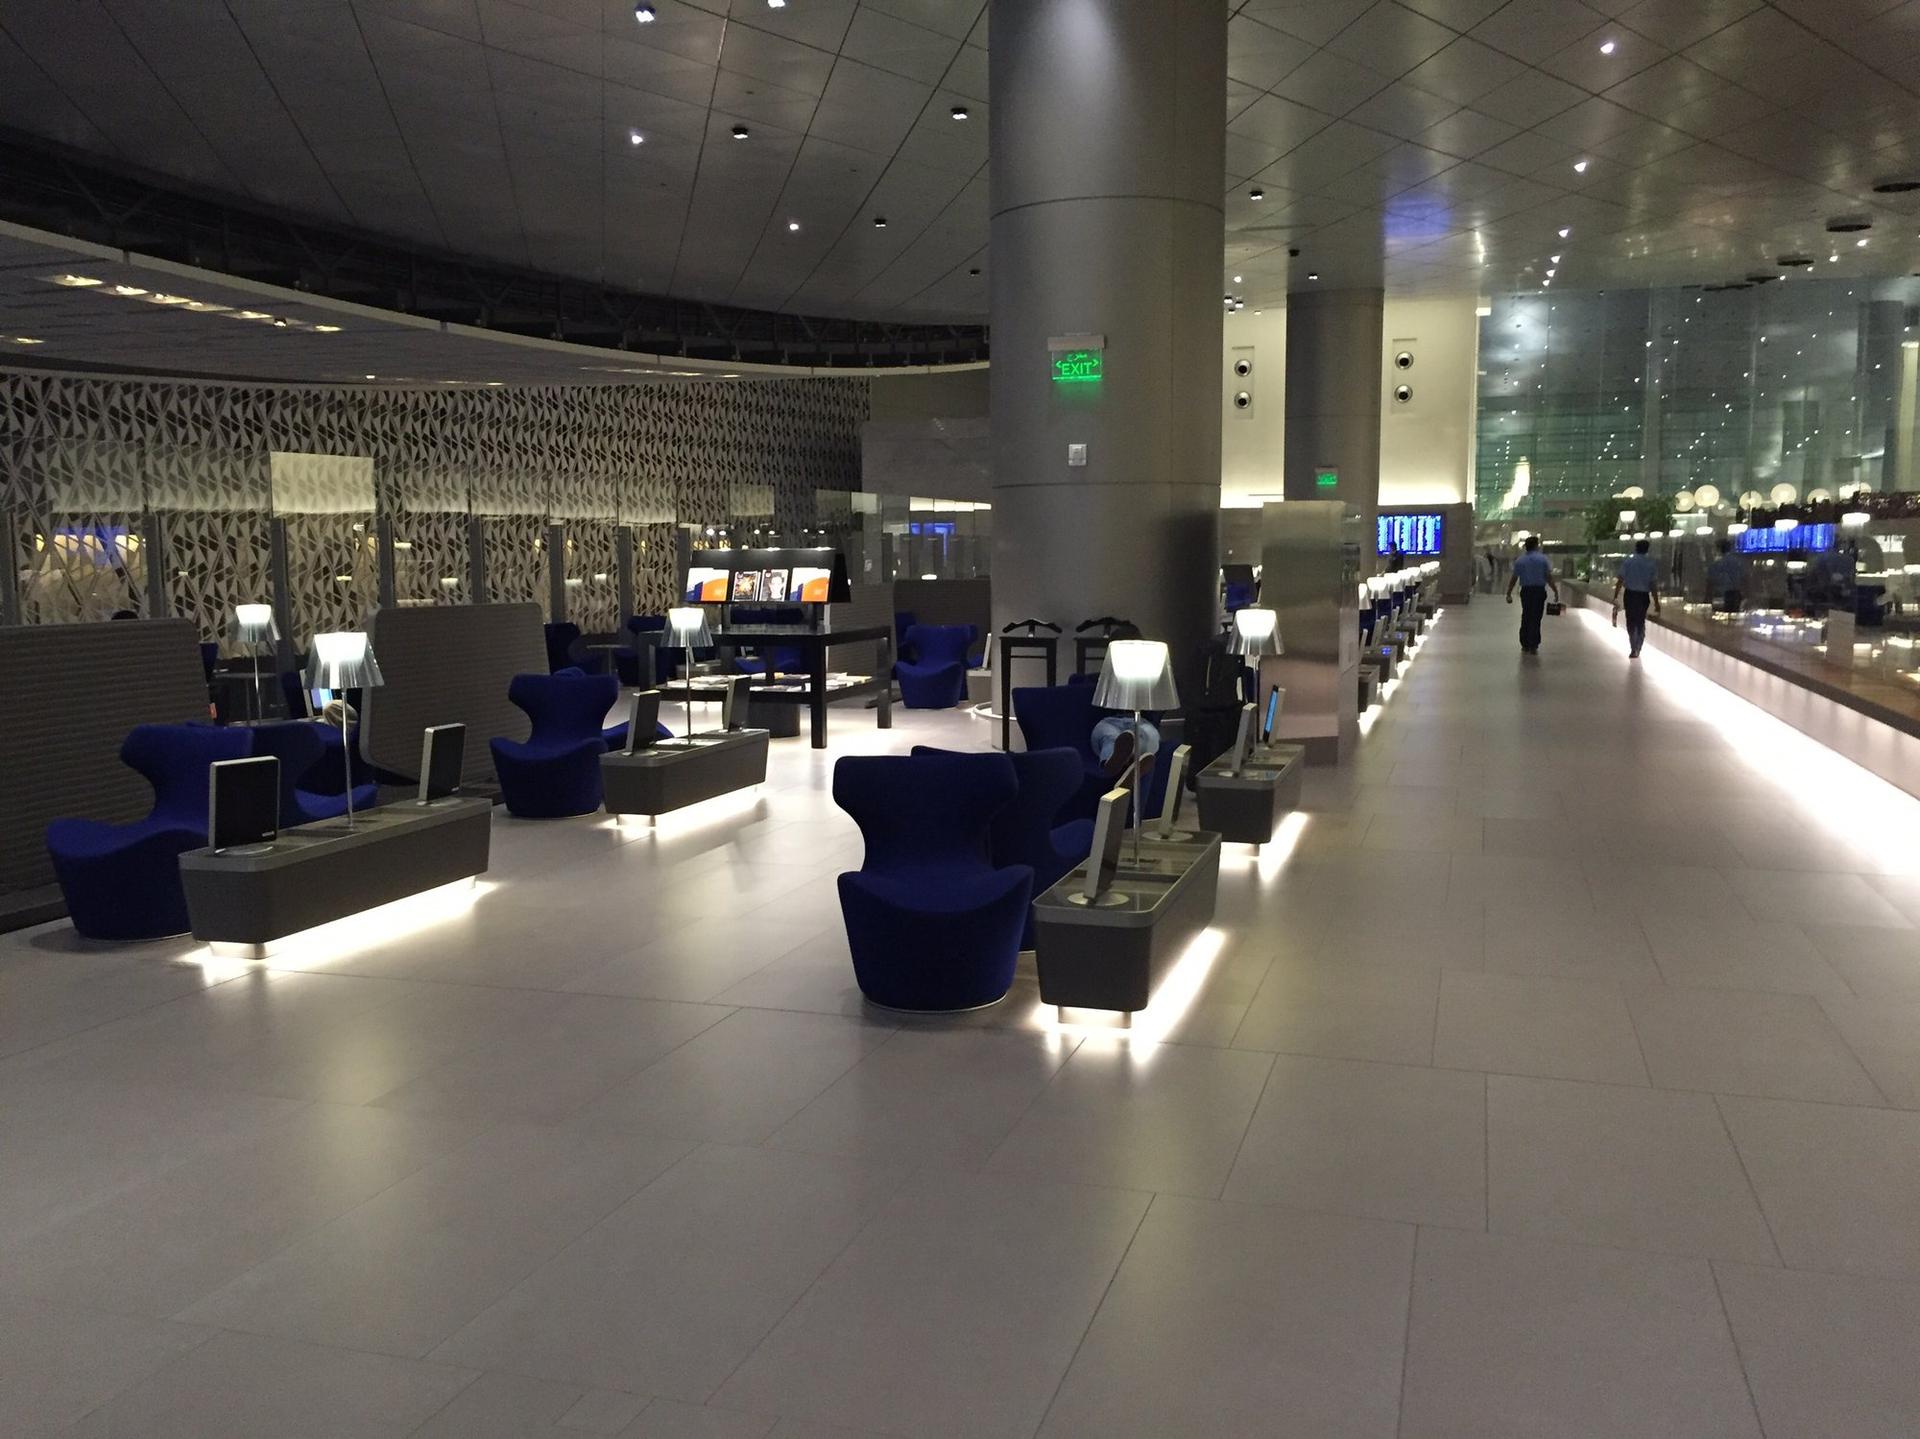 Qatar Airways Al Mourjan Business Class Lounge image 67 of 100